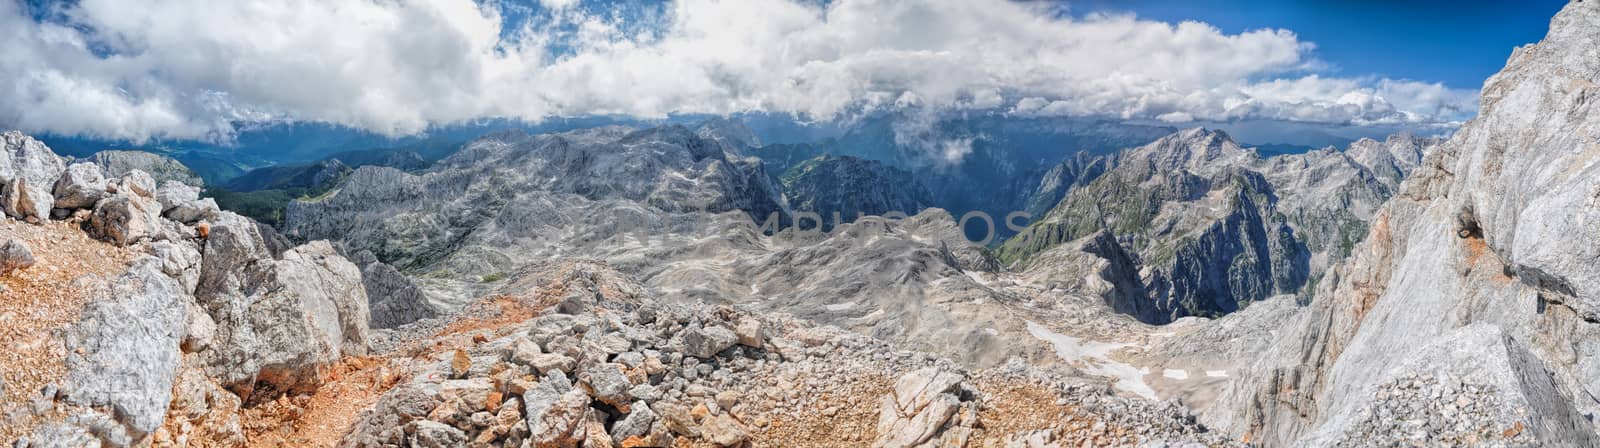 Triglav in Julian Alps by MichalKnitl